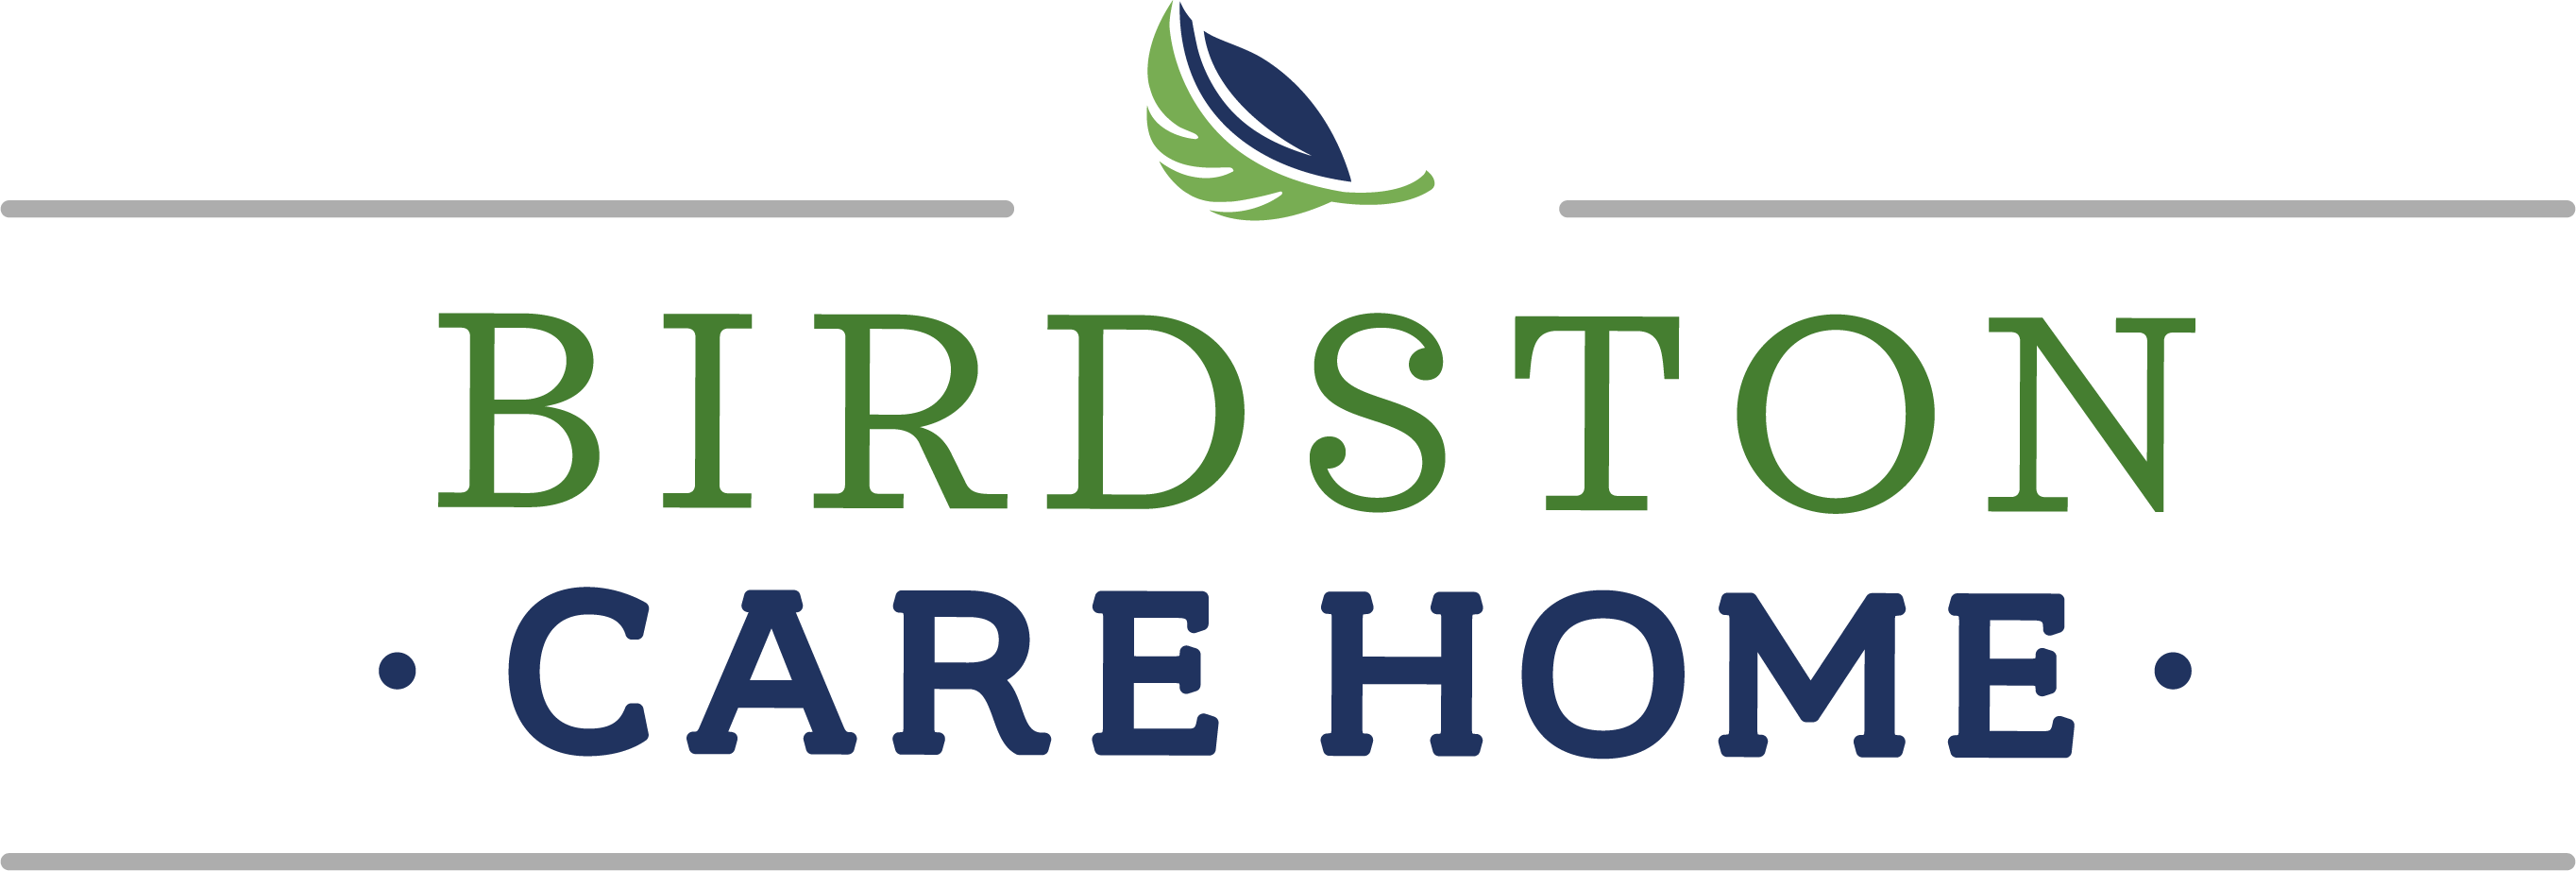 Birdston Care Home Logo 2018 Large.png